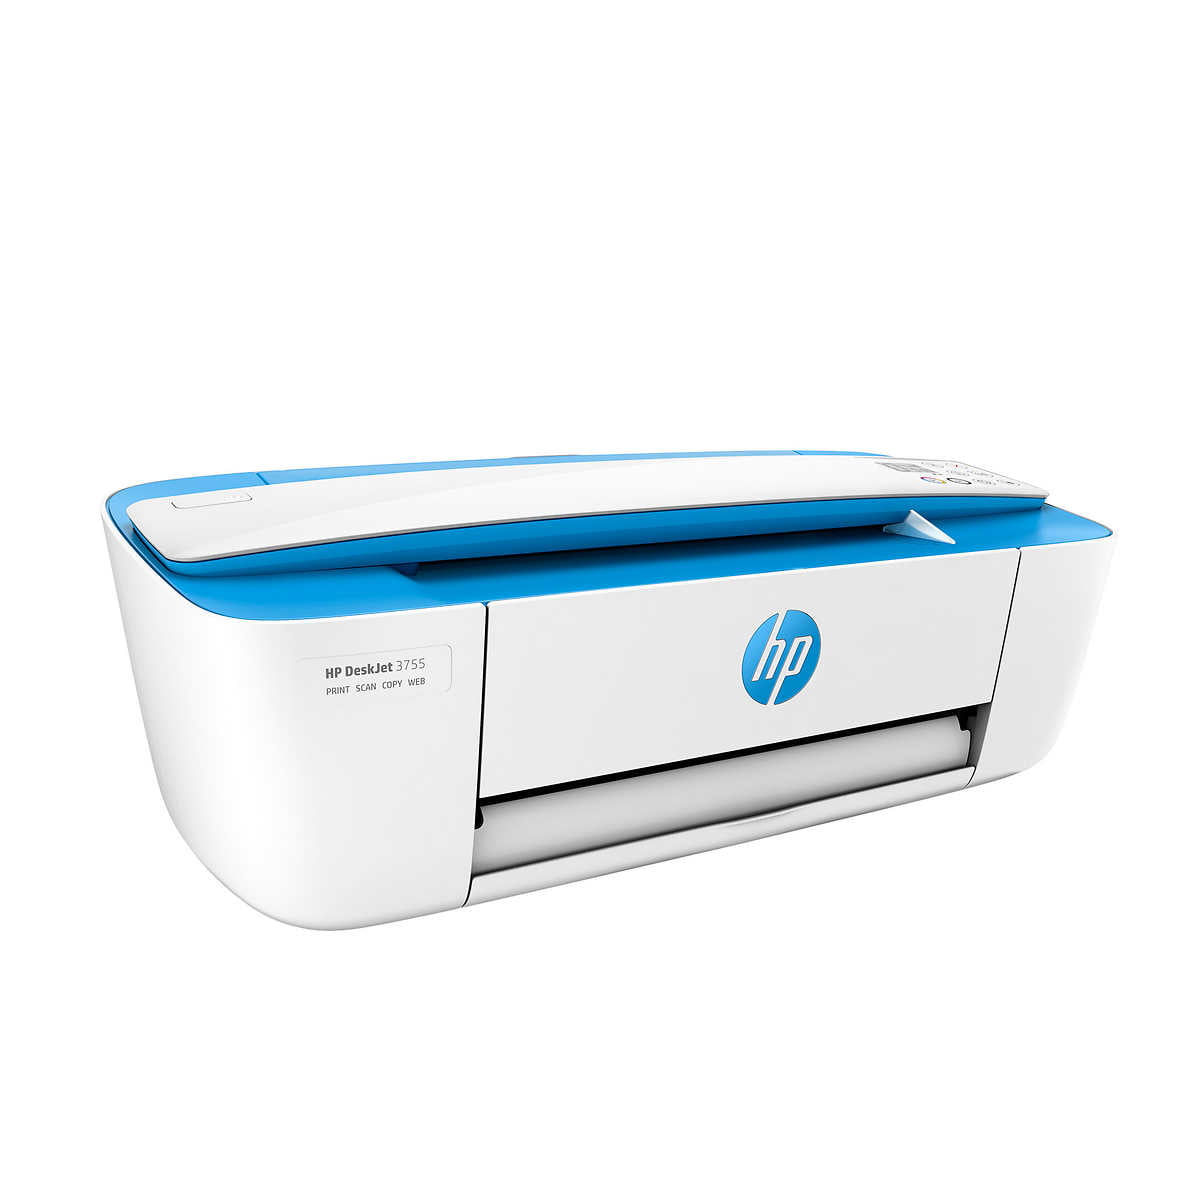 HP Deskjet 3755 Wireless Colour All-In-One Printer